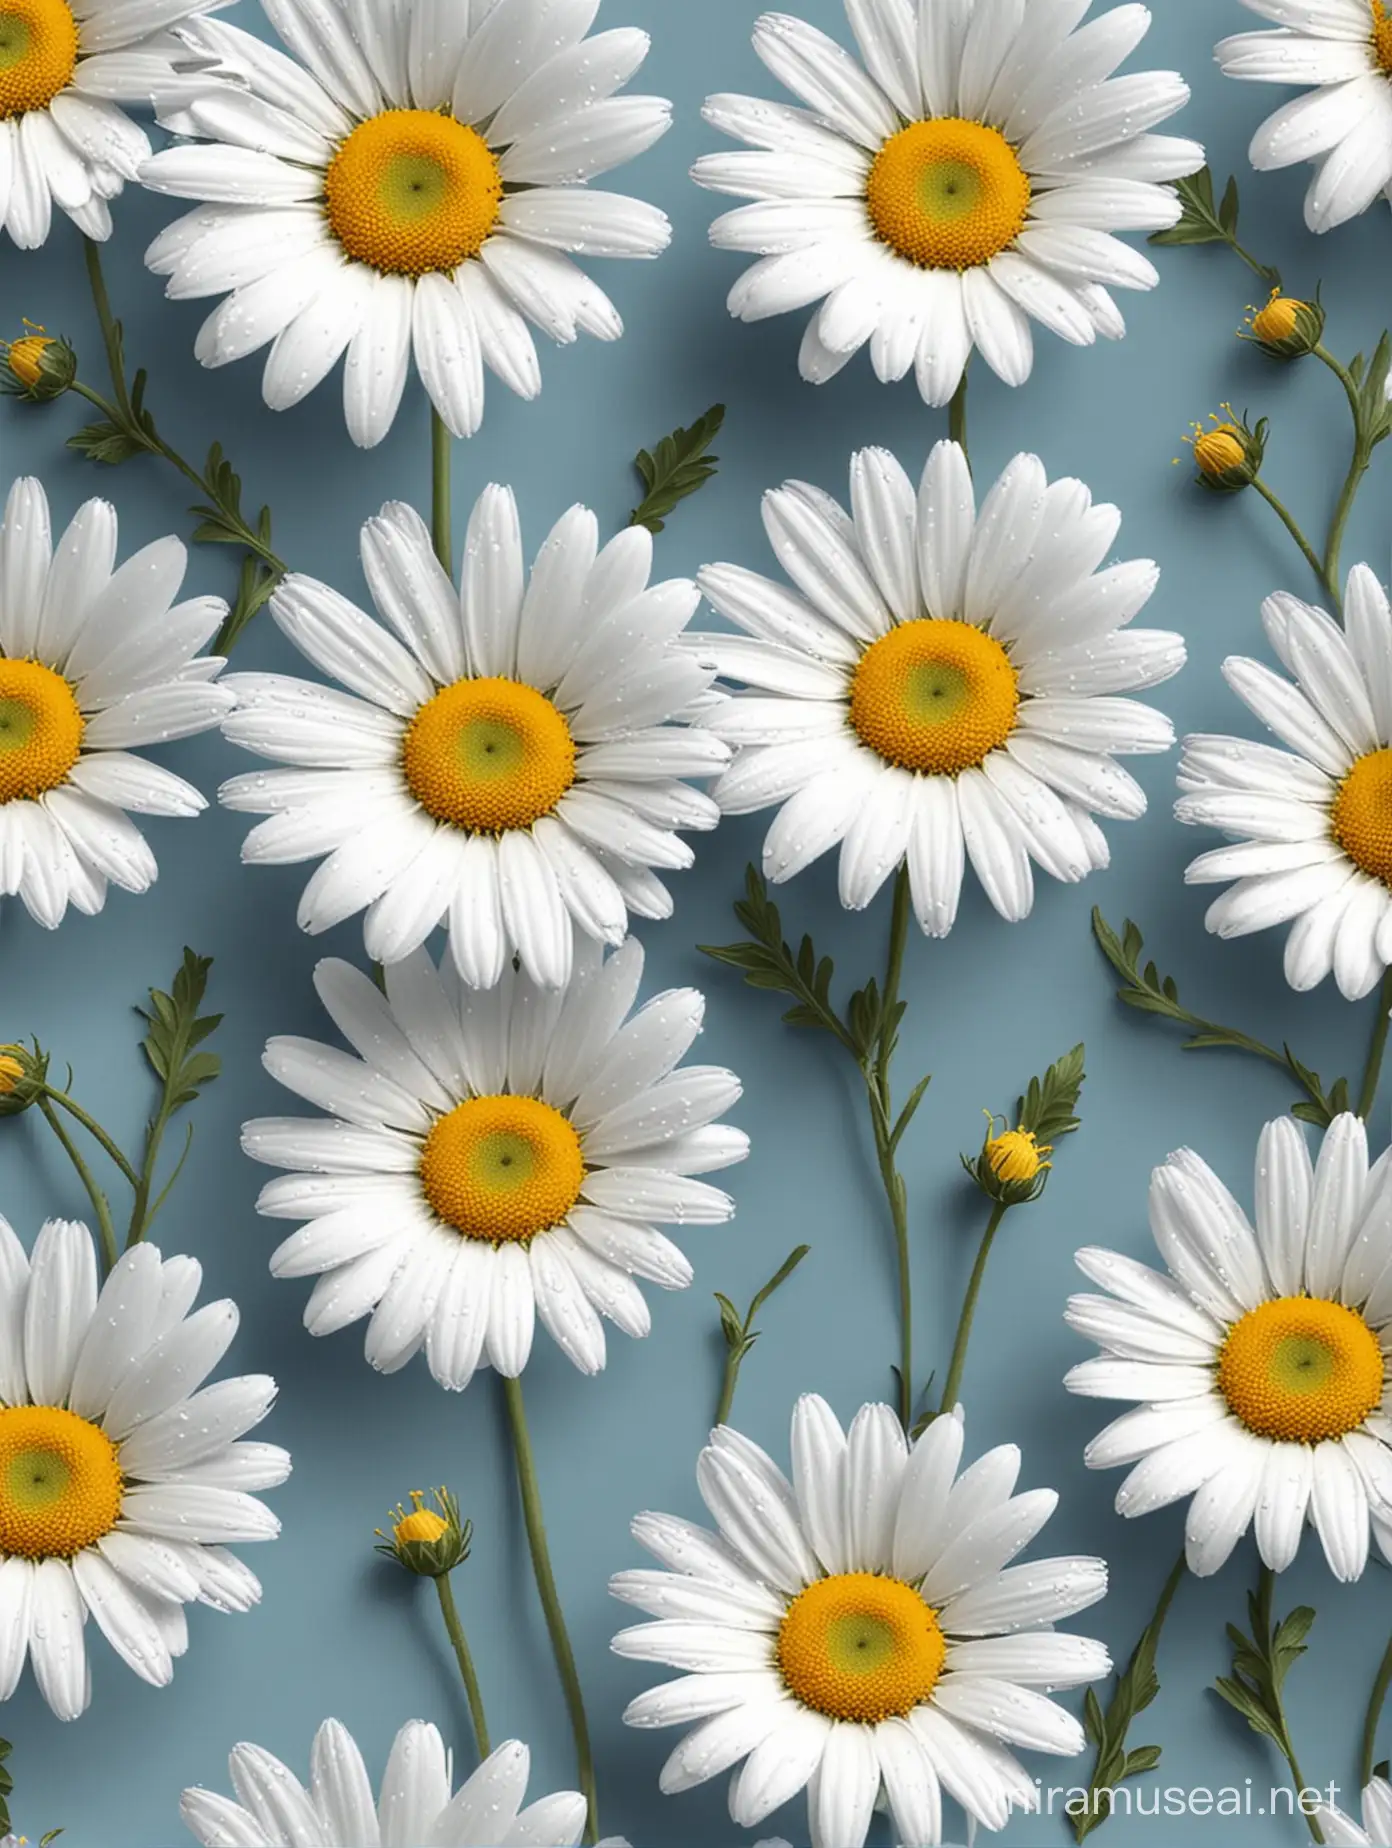 natural daisy blue wild 1 flower botanical seamless pattern vector illustration white background